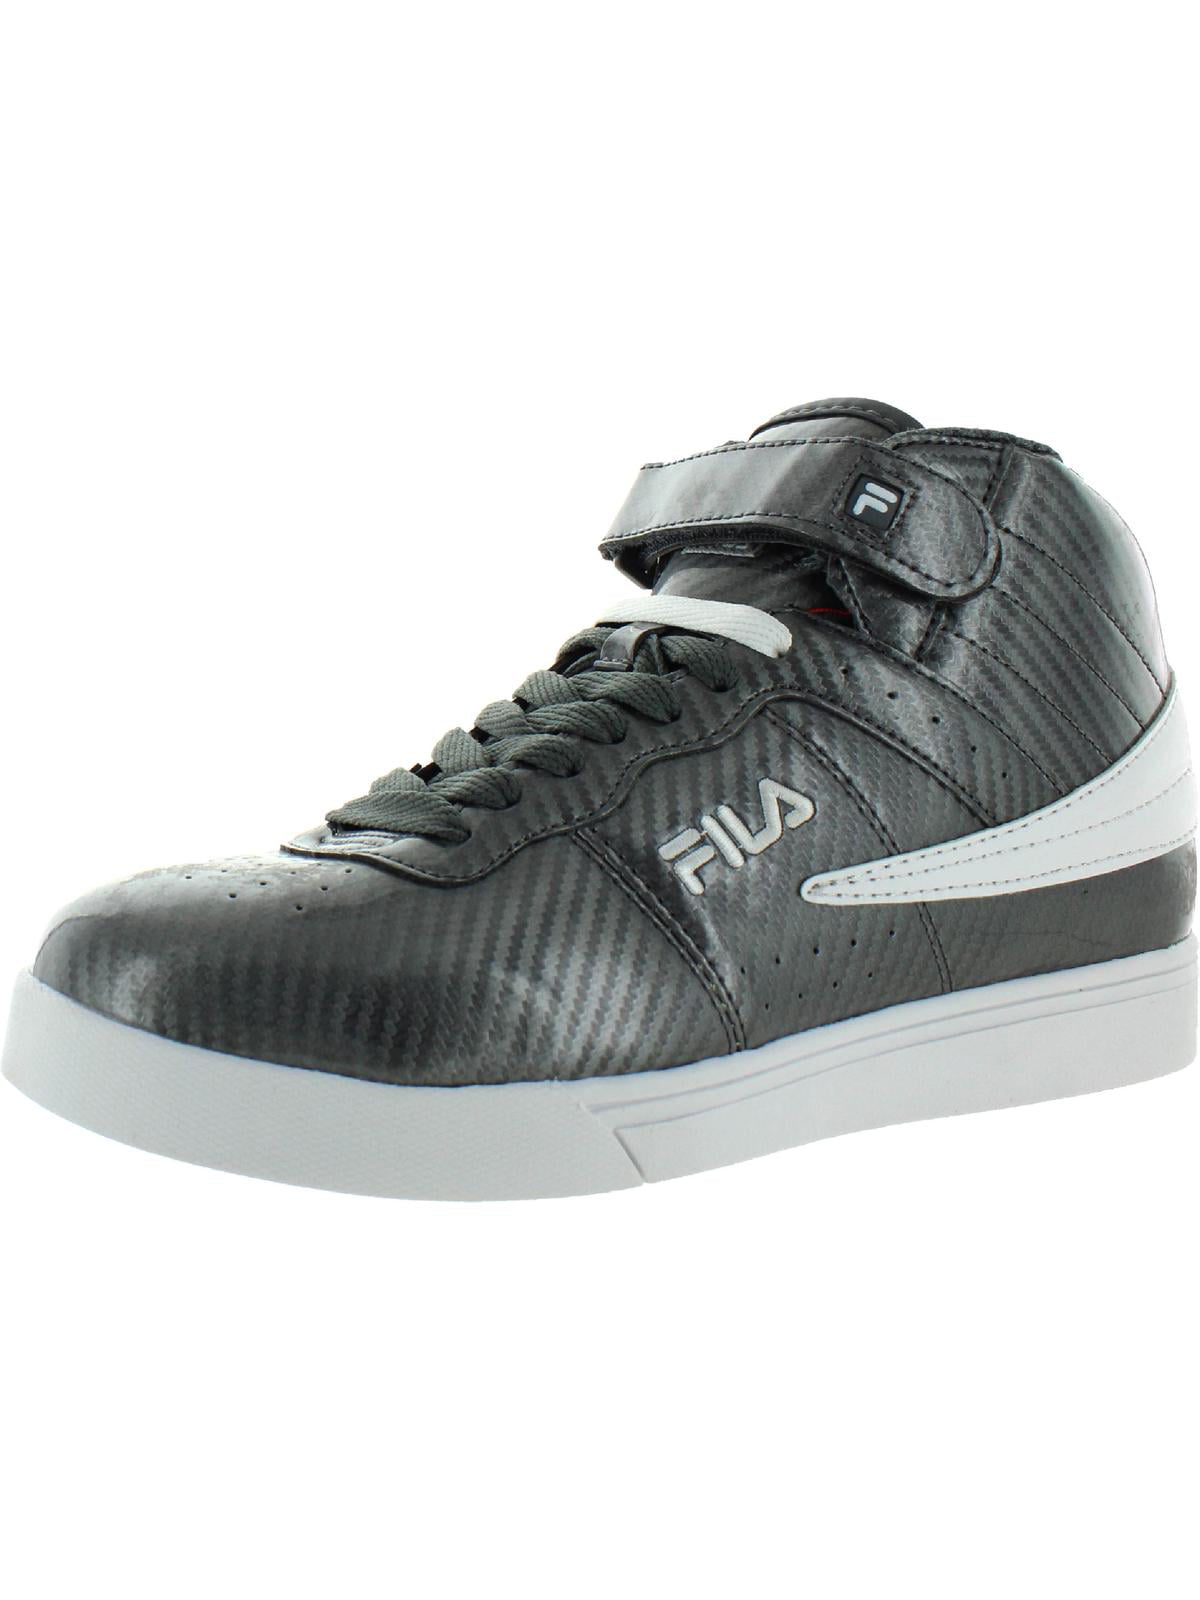 FILA - Fila Mens Vulc 13 Windshift Mid-Cut Ankle Strap Fashion Sneakers ...